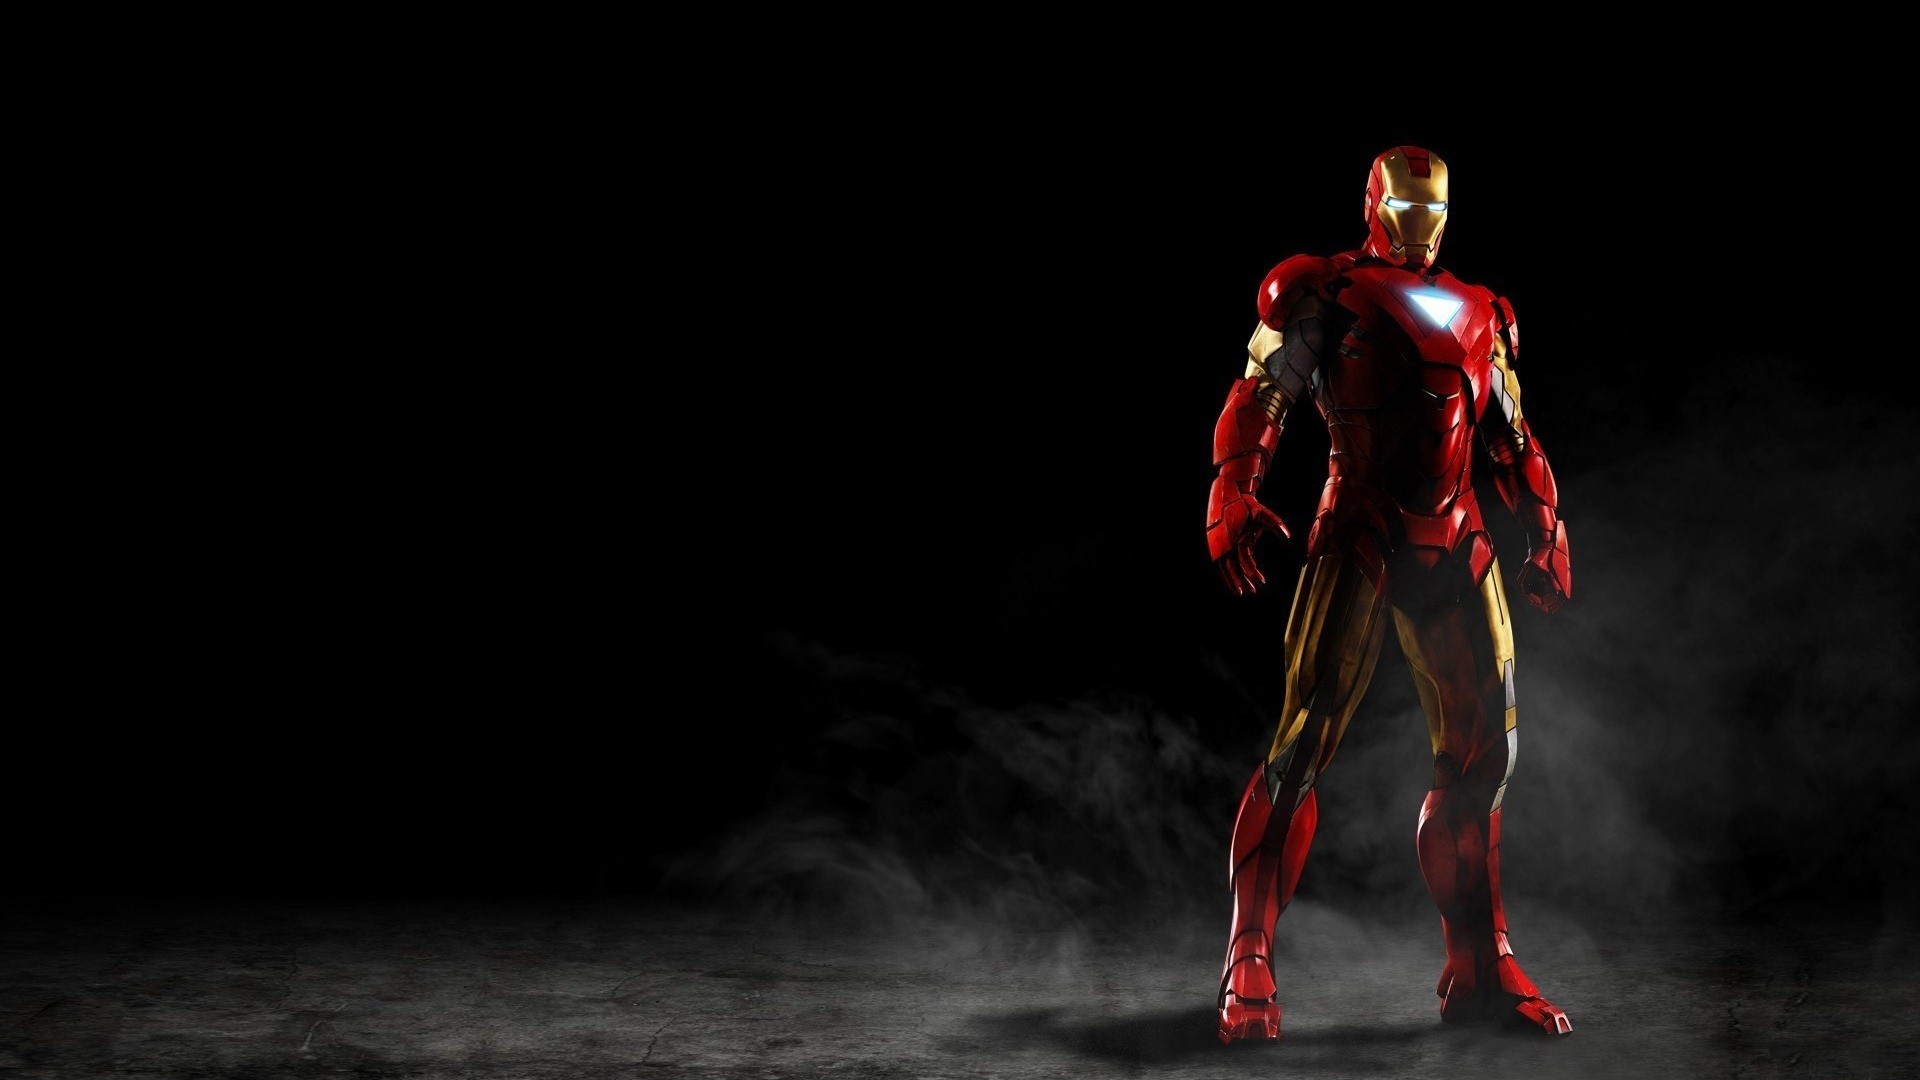 General 1920x1080 Iron Man The Avengers armor Marvel Comics superhero